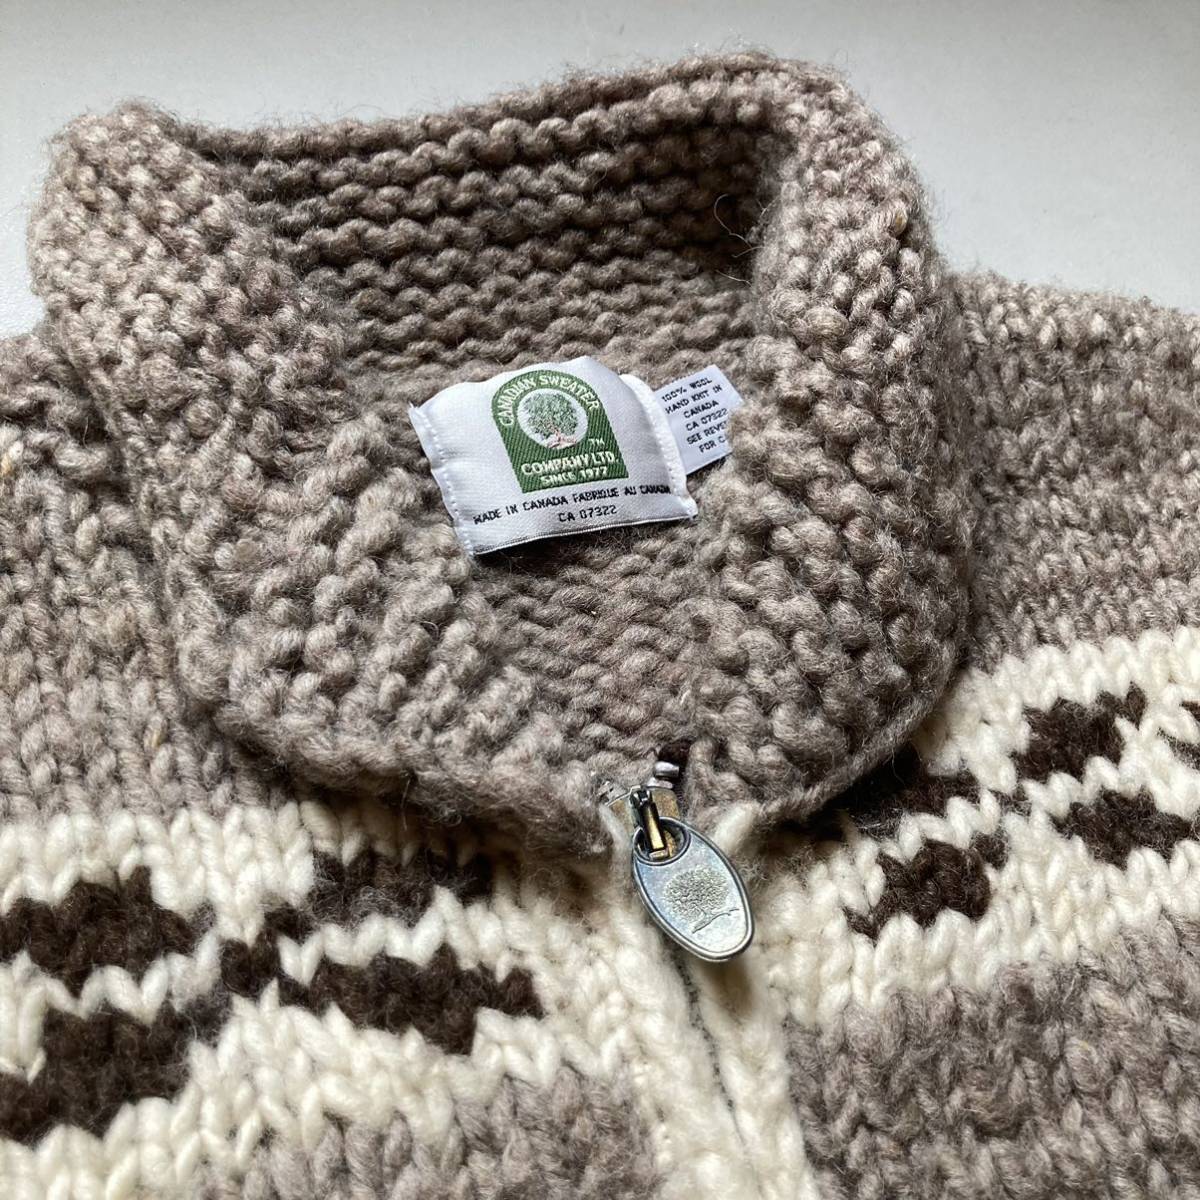 Canadian sweater cowichan sweater “wool100%” “hand knit in Canada” カナディアンセーター カウチンセーター ハンドニット カナダ製_画像4